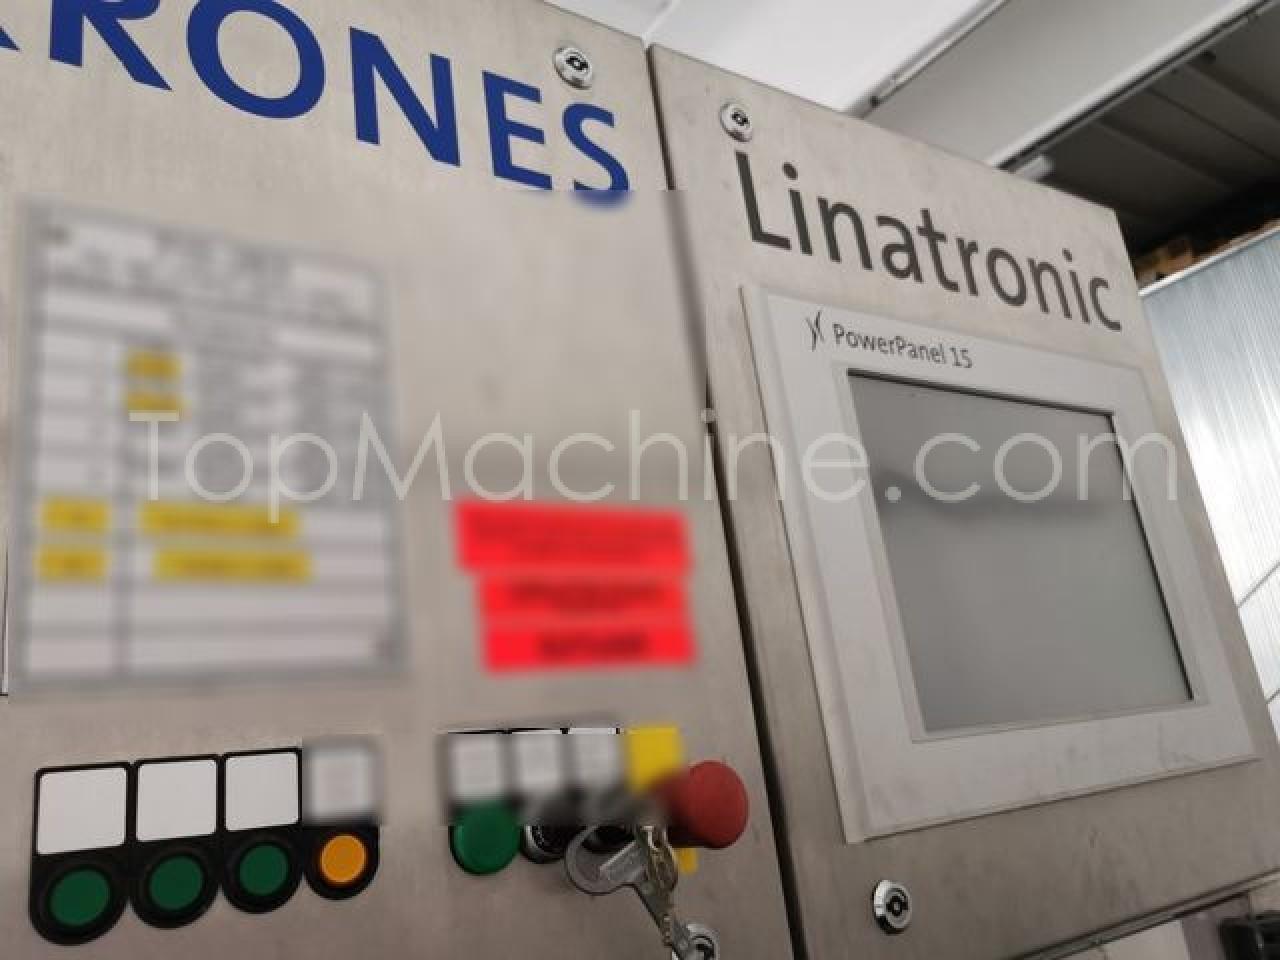 Used Krones Linatronic 饮料 杂项